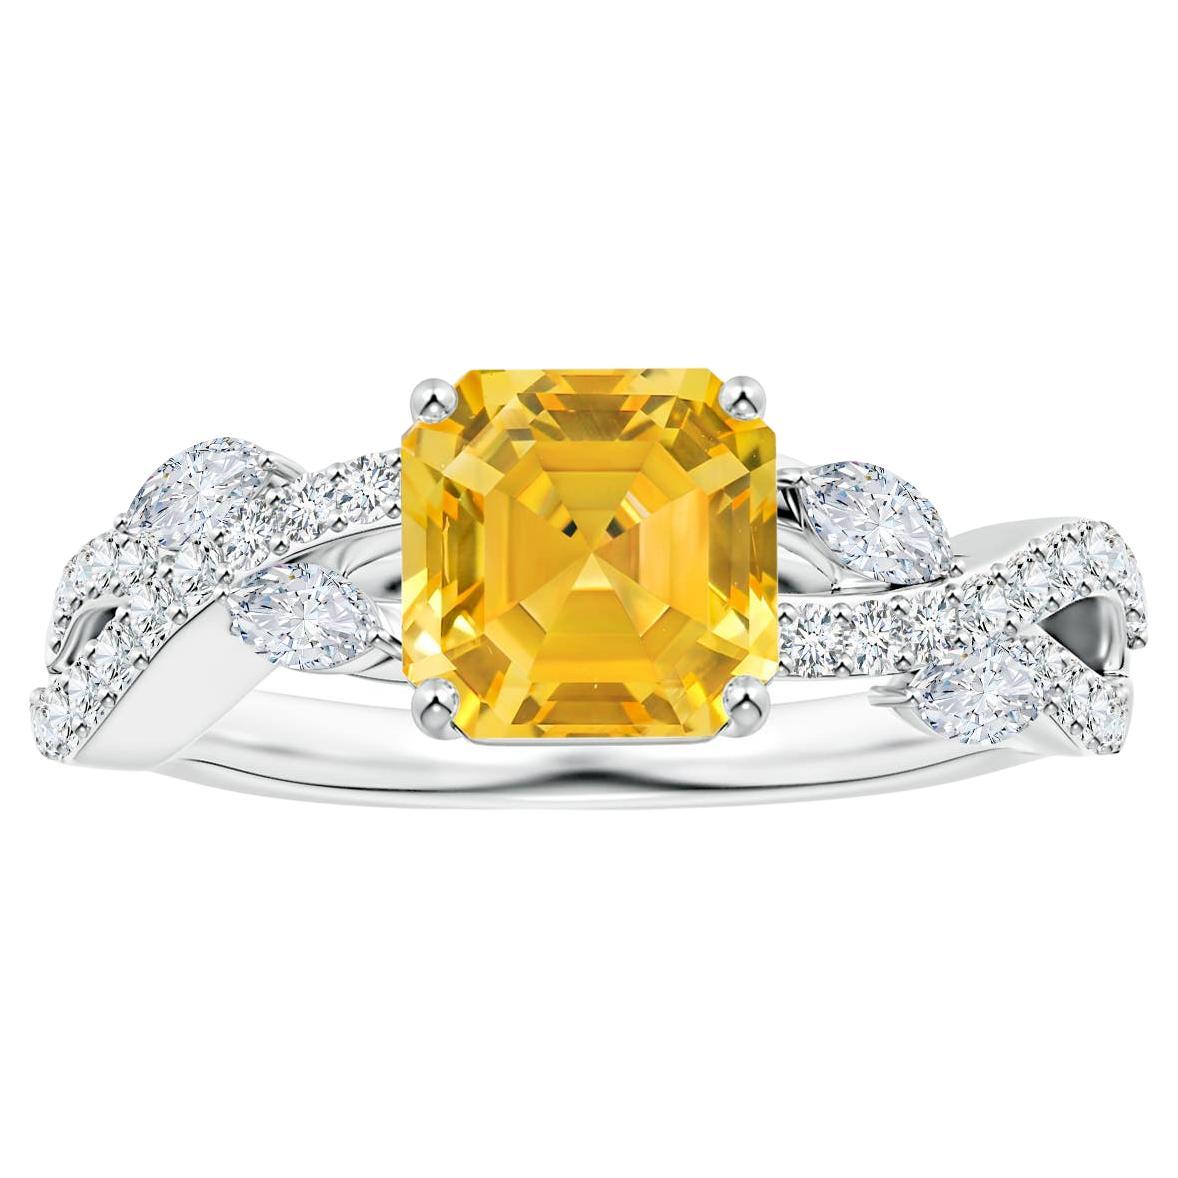 Angara Gia Bague en or blanc avec diamants et saphir jaune taille émeraude certifié